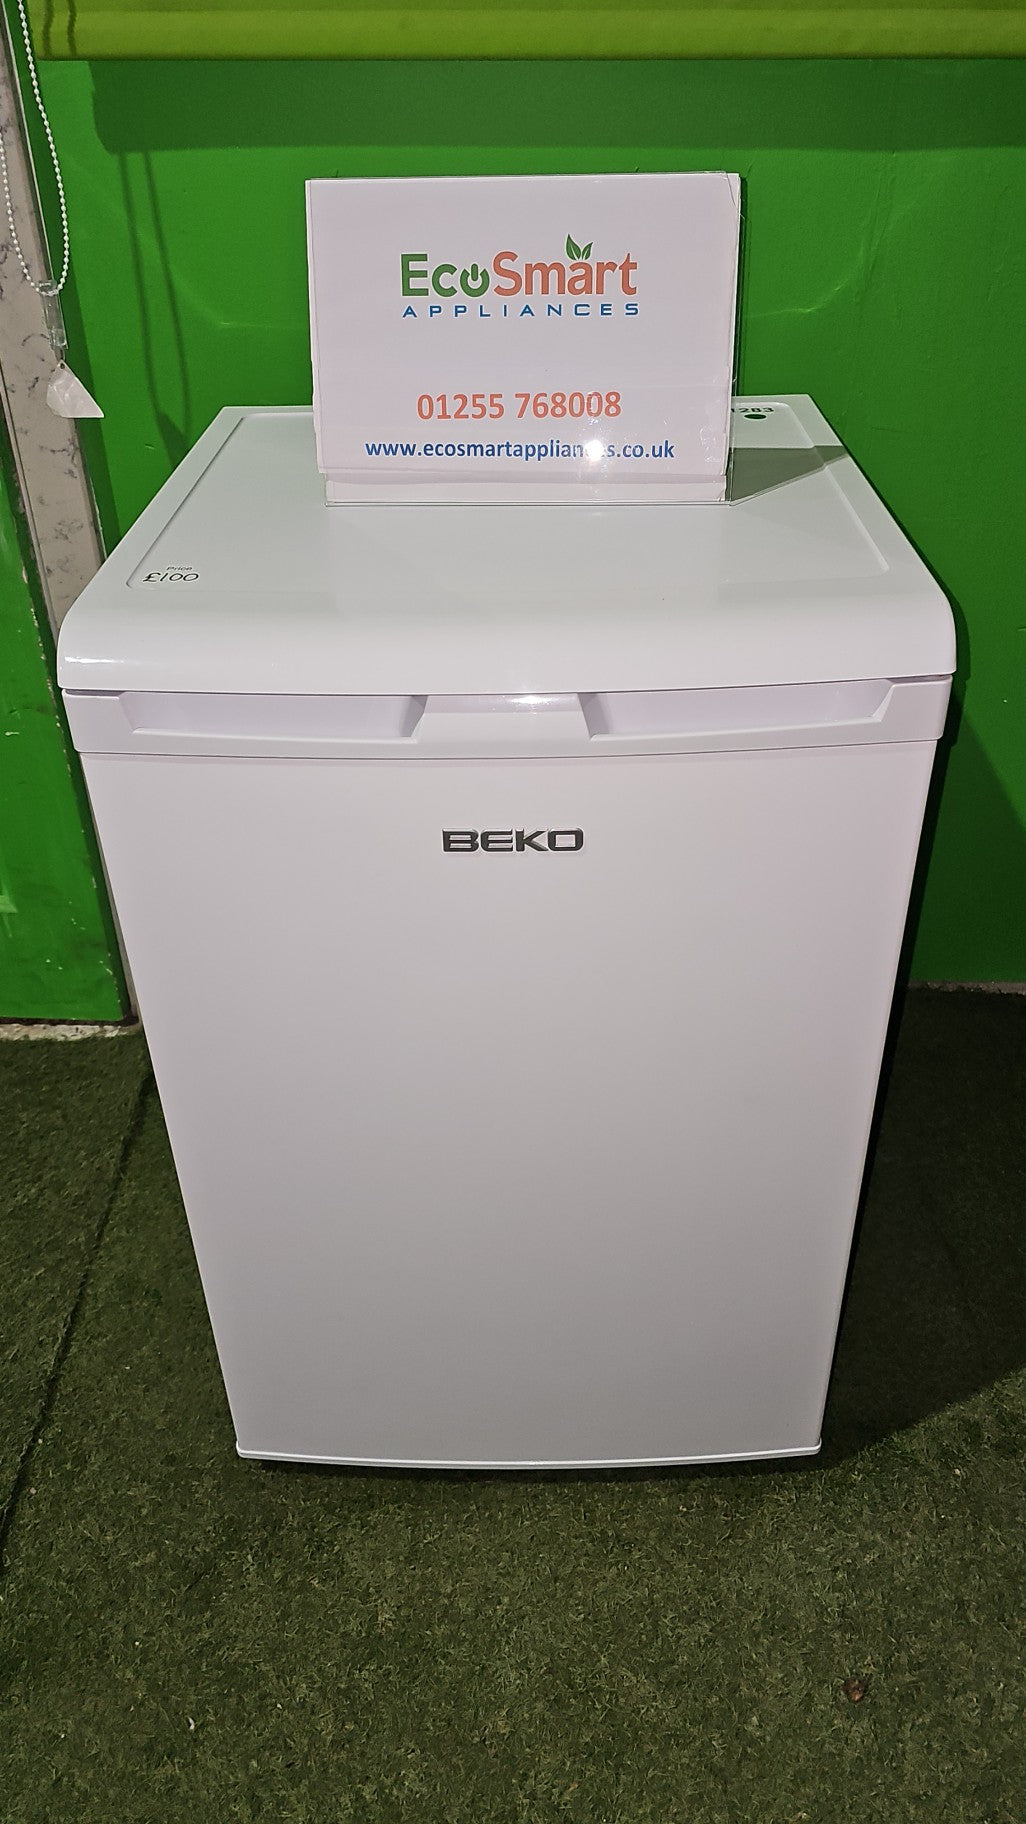 EcoSmart Appliances - Beko Under Counter Freezer (1283)